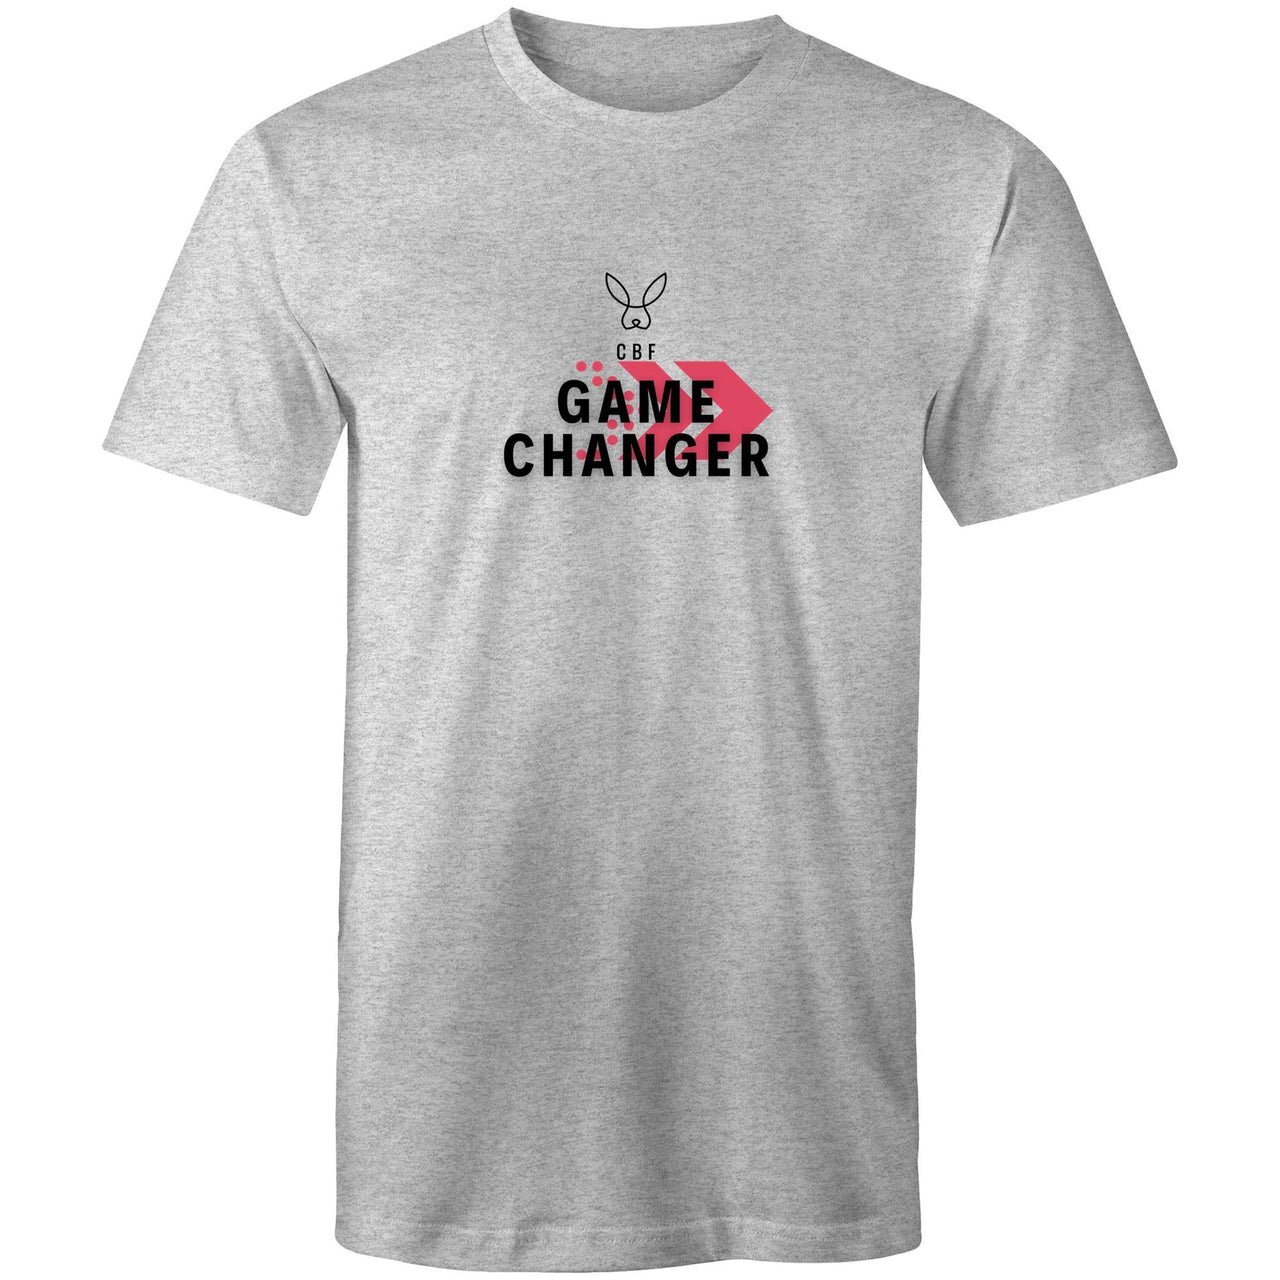 CBF Game Changer Unisex Mens Womens Crew T-Shirt grey marle by CBF Clothing